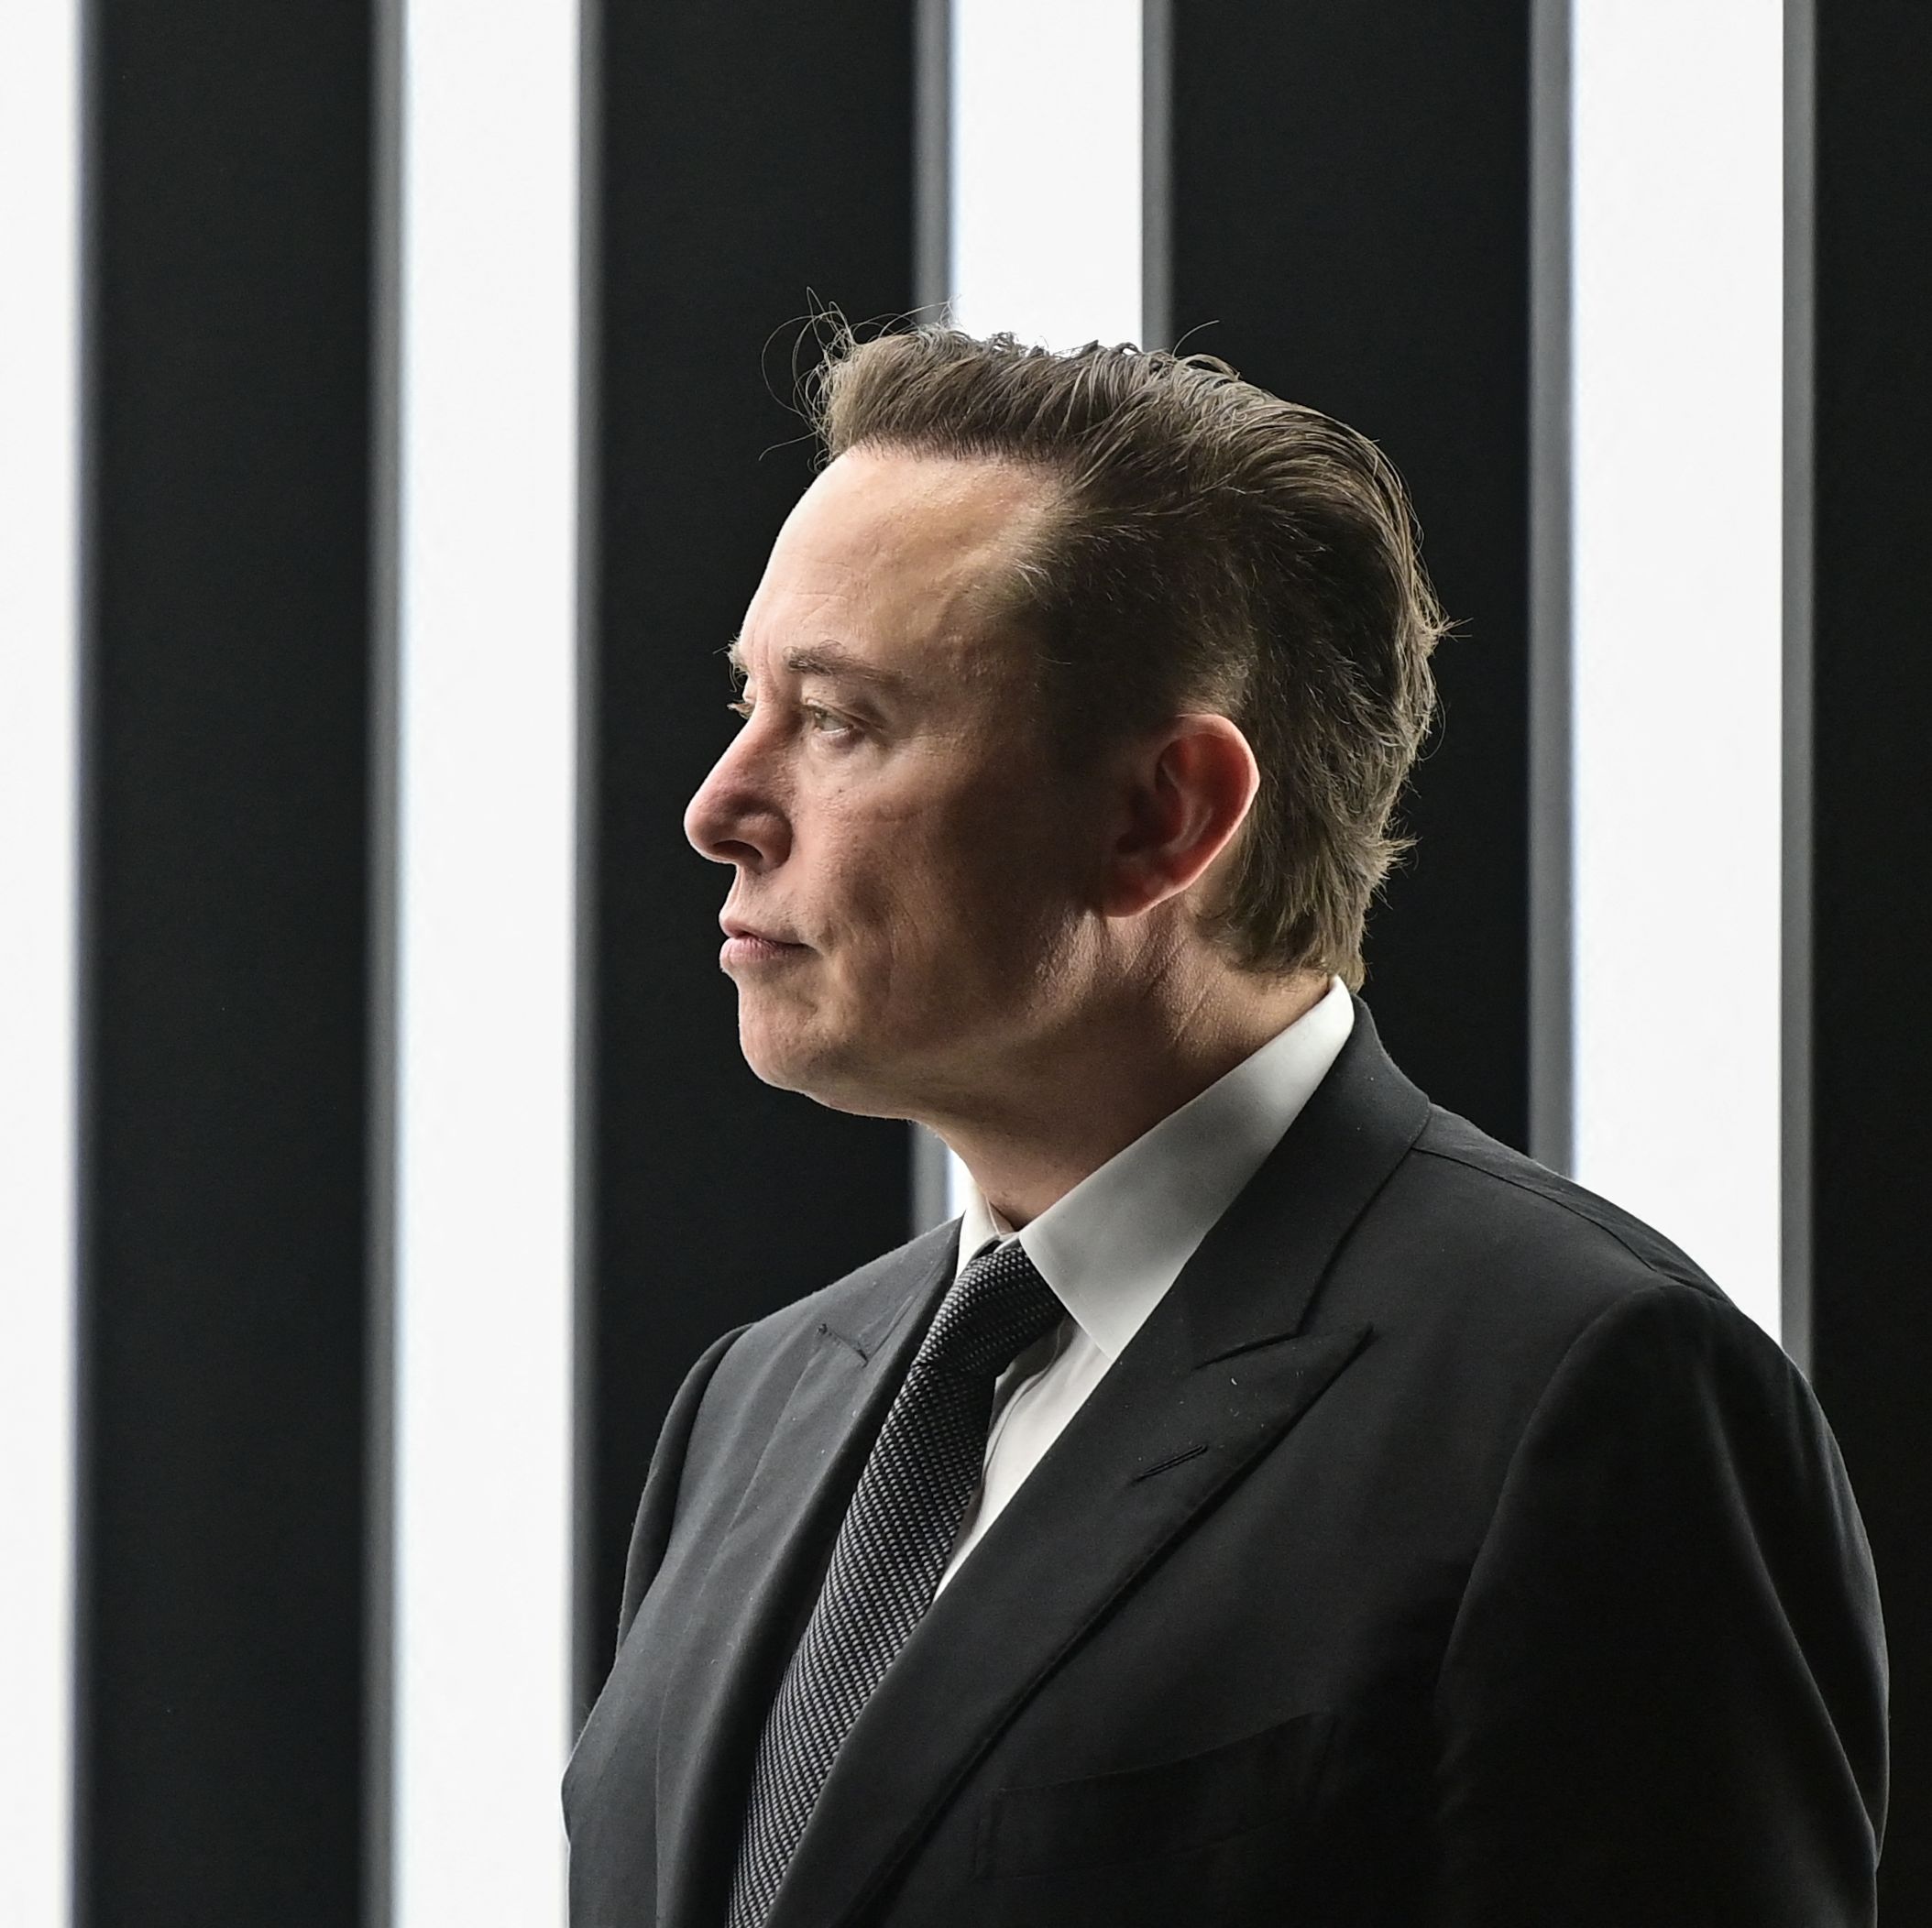 Peer Inside the Mind of Elon Musk